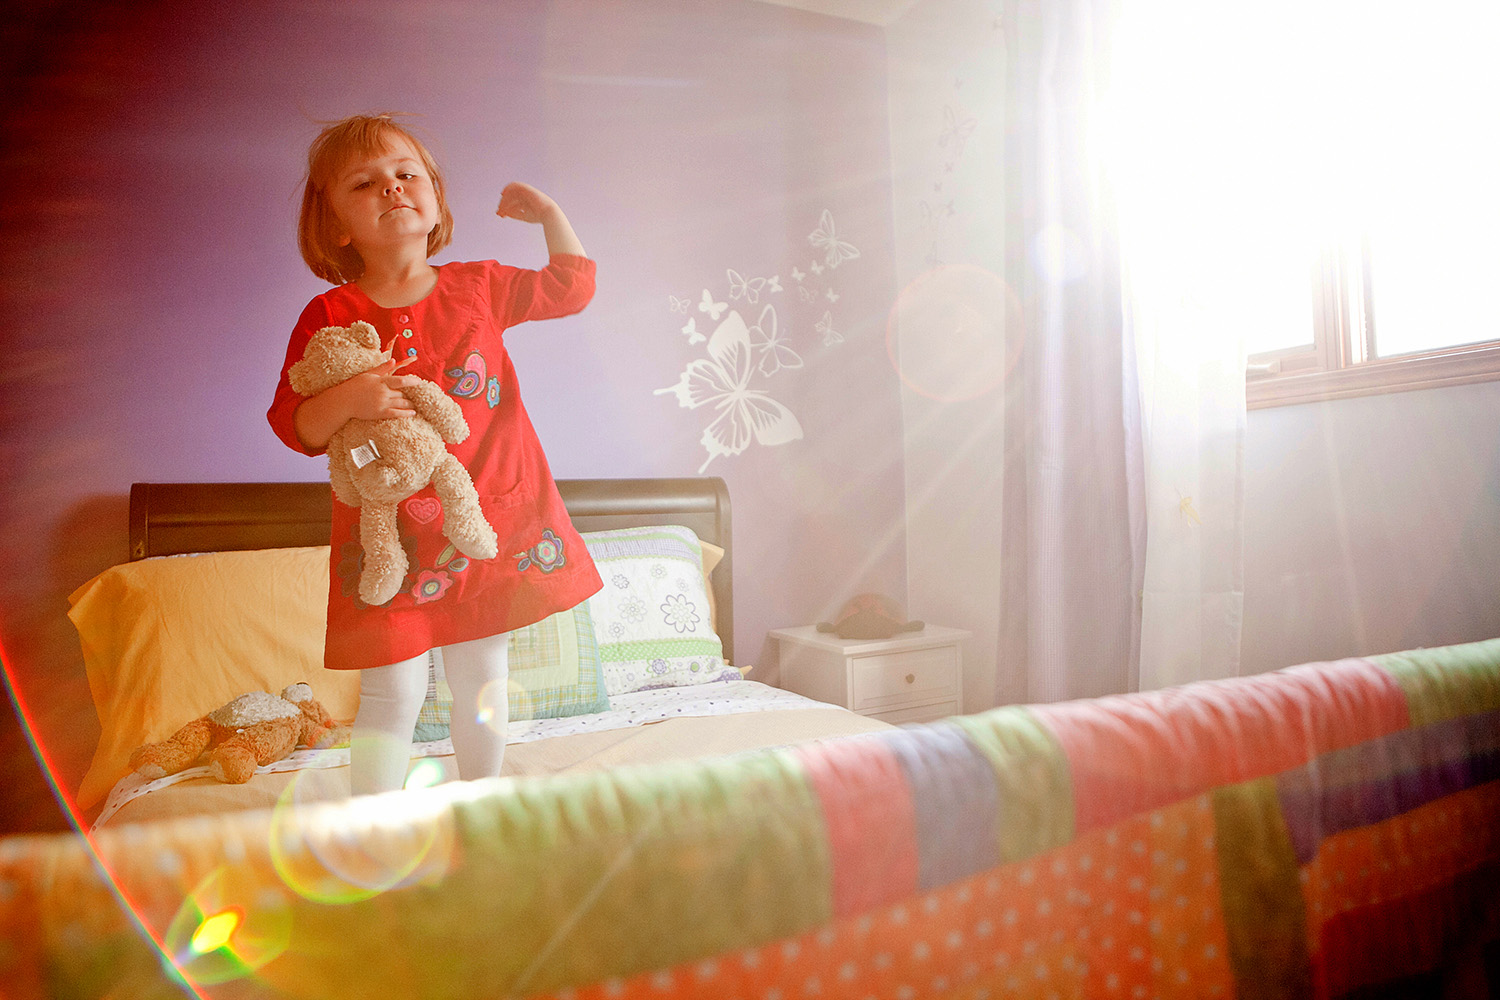 Strong Girl in the sunlight in her bedroom